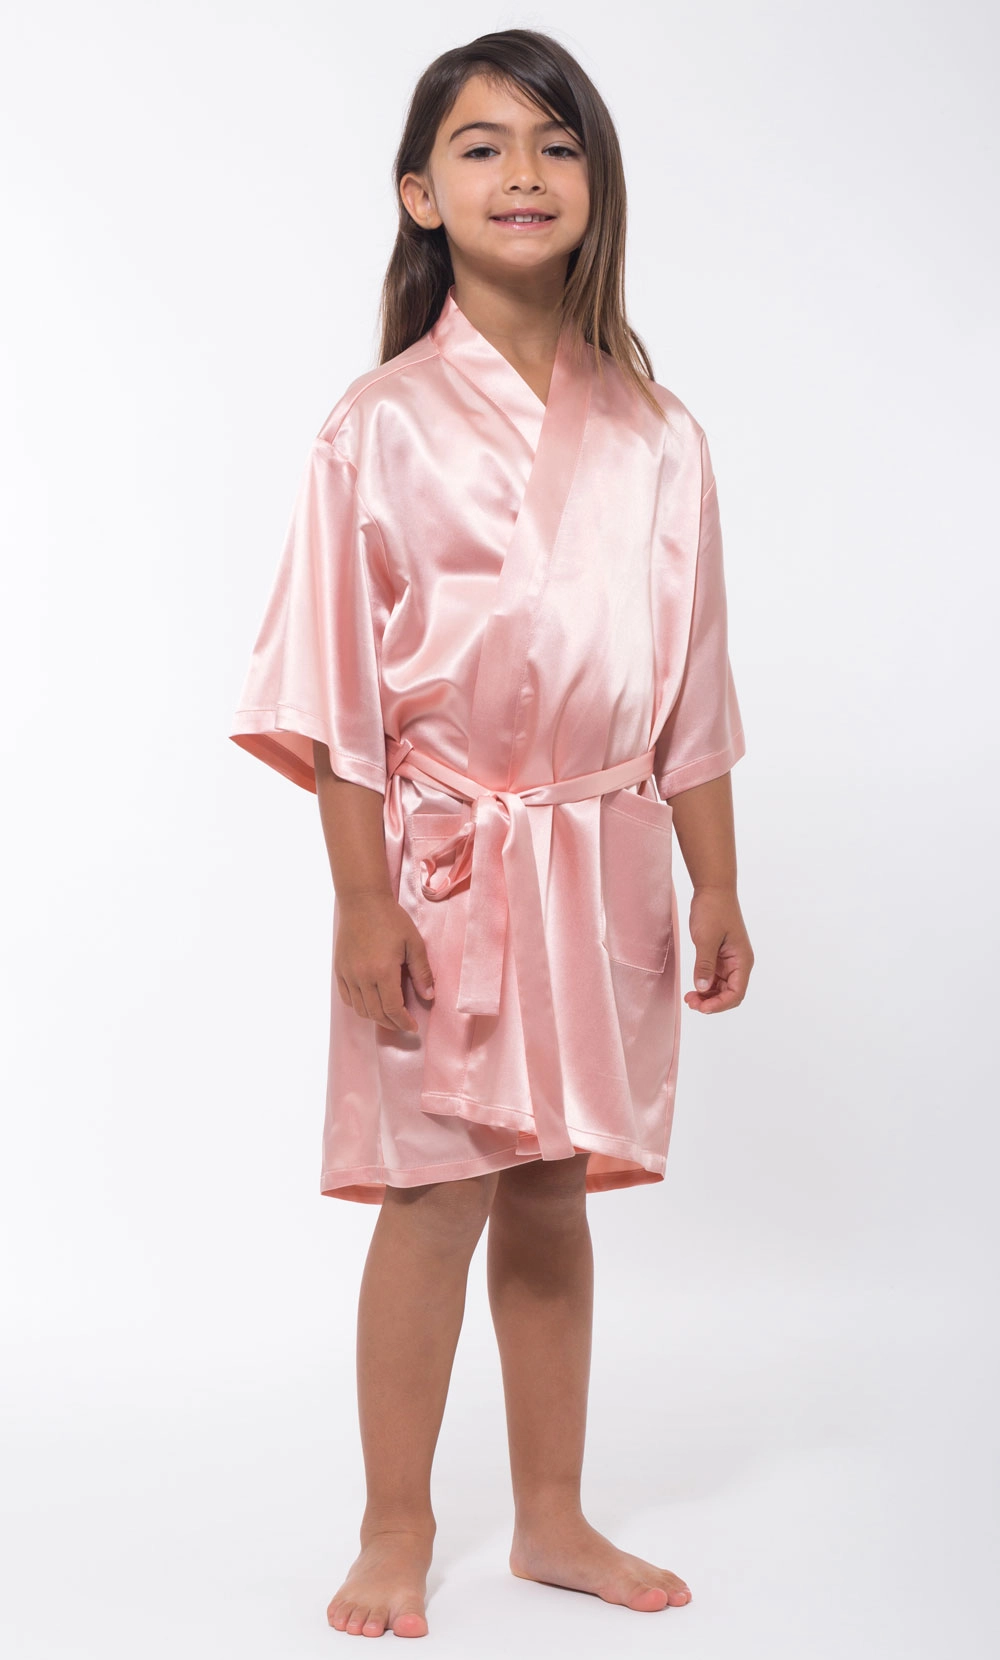 Pink Plush Robe Luxury Personalized Bathrobe Women's 